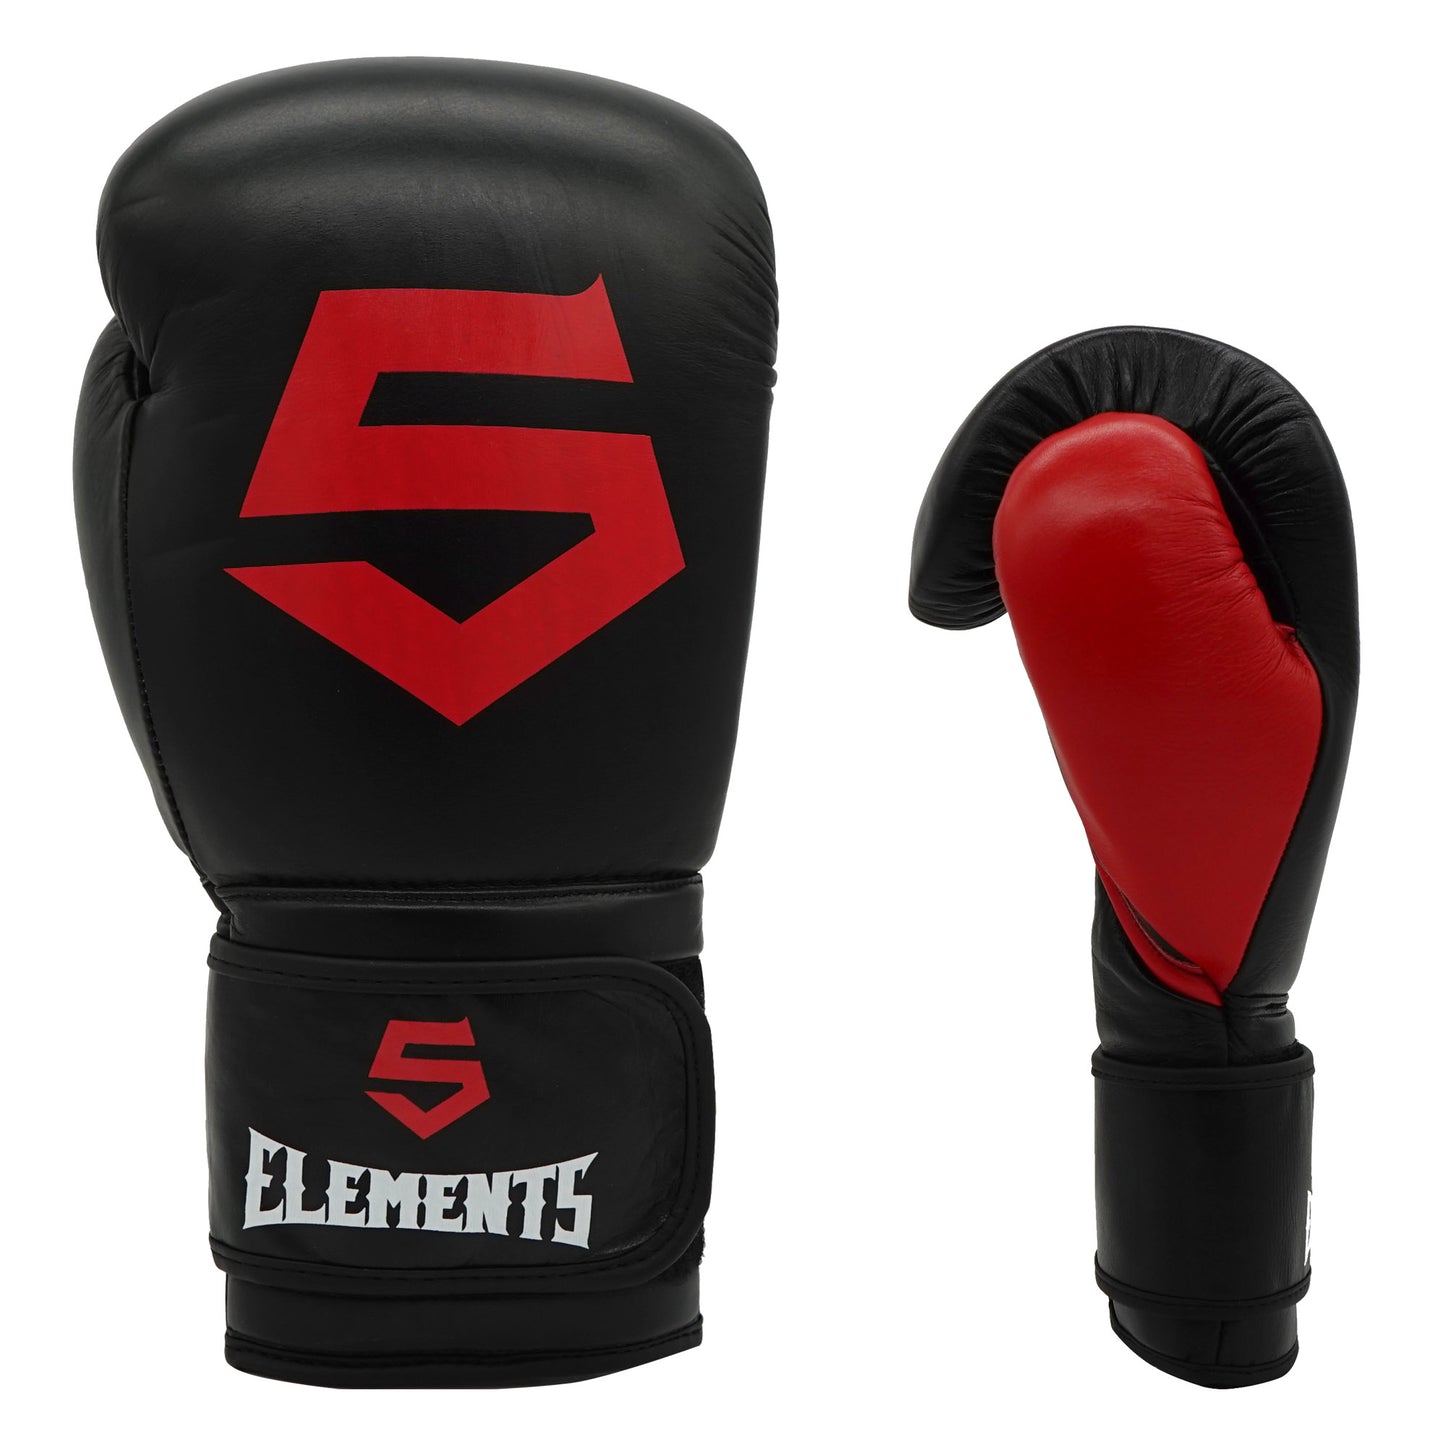 5 Elements Elite Boxhandschuh-Schwarz/Rot